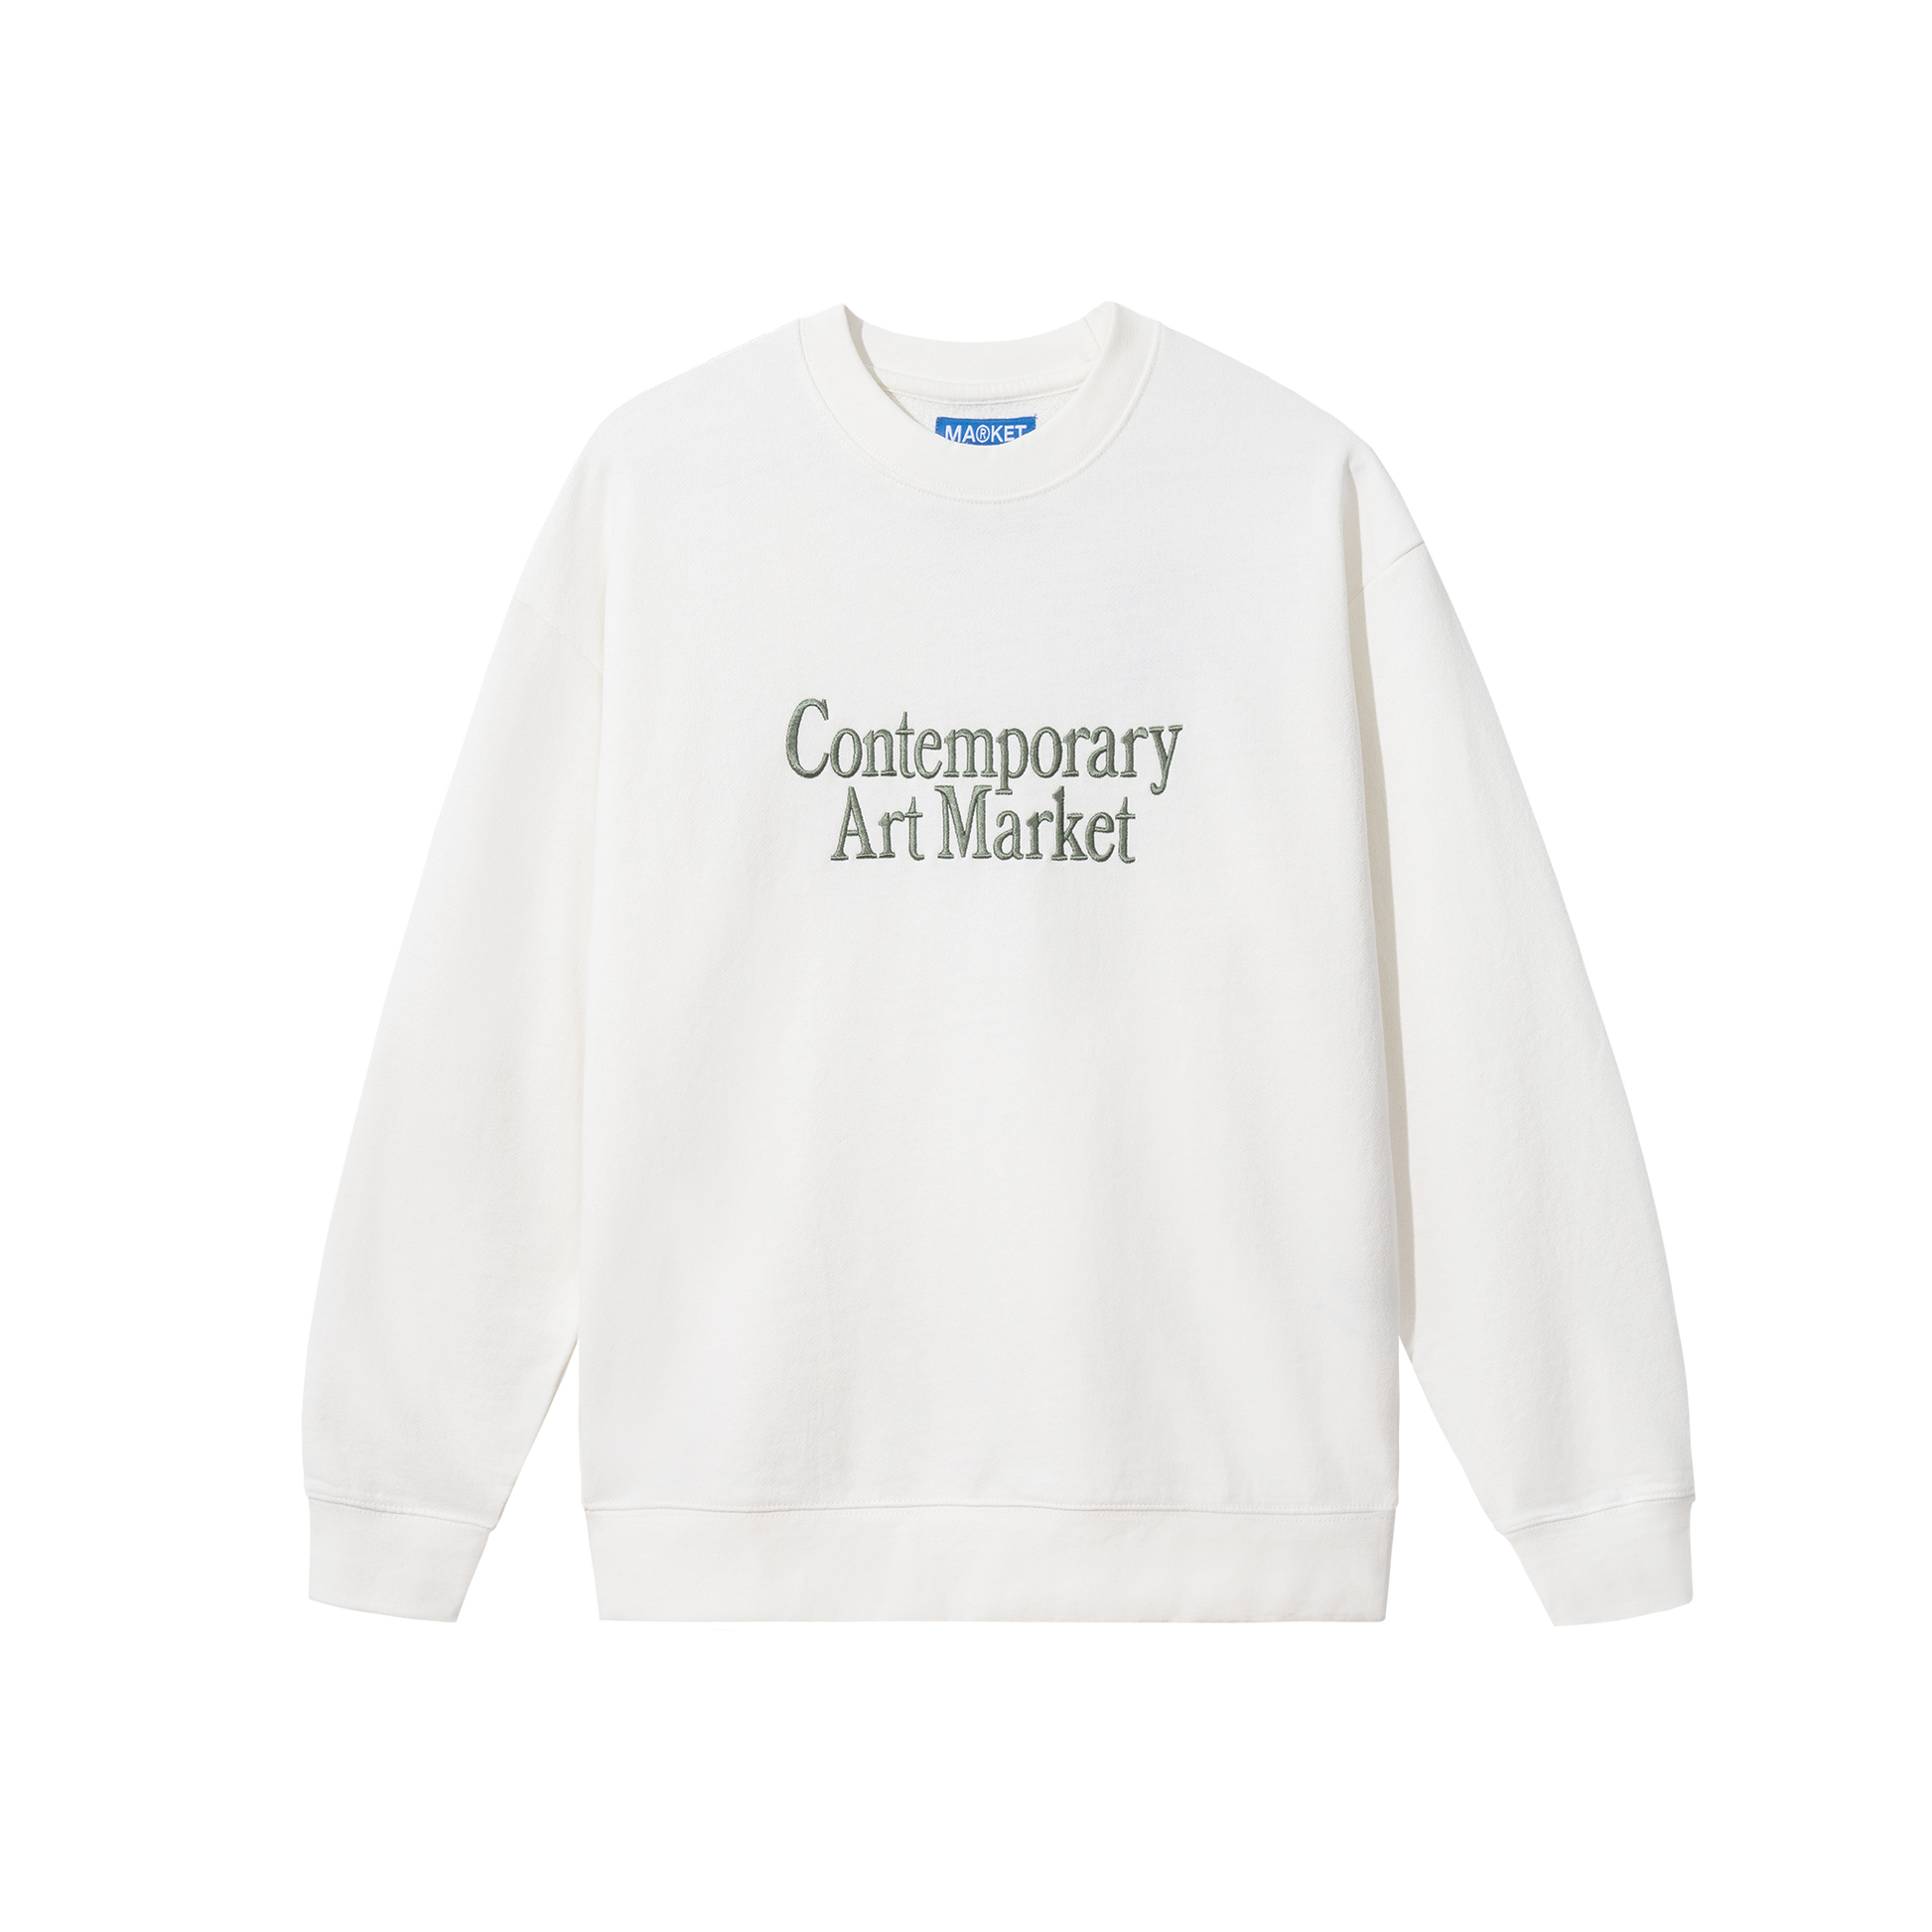 MARKET clothing brand. MARKET graphic tees. Chinatown Market clothing. MARKET Studios crewneck sweatshirt . 100% Cotton crewneck. Graphic Streetwear Tee Shirt. 